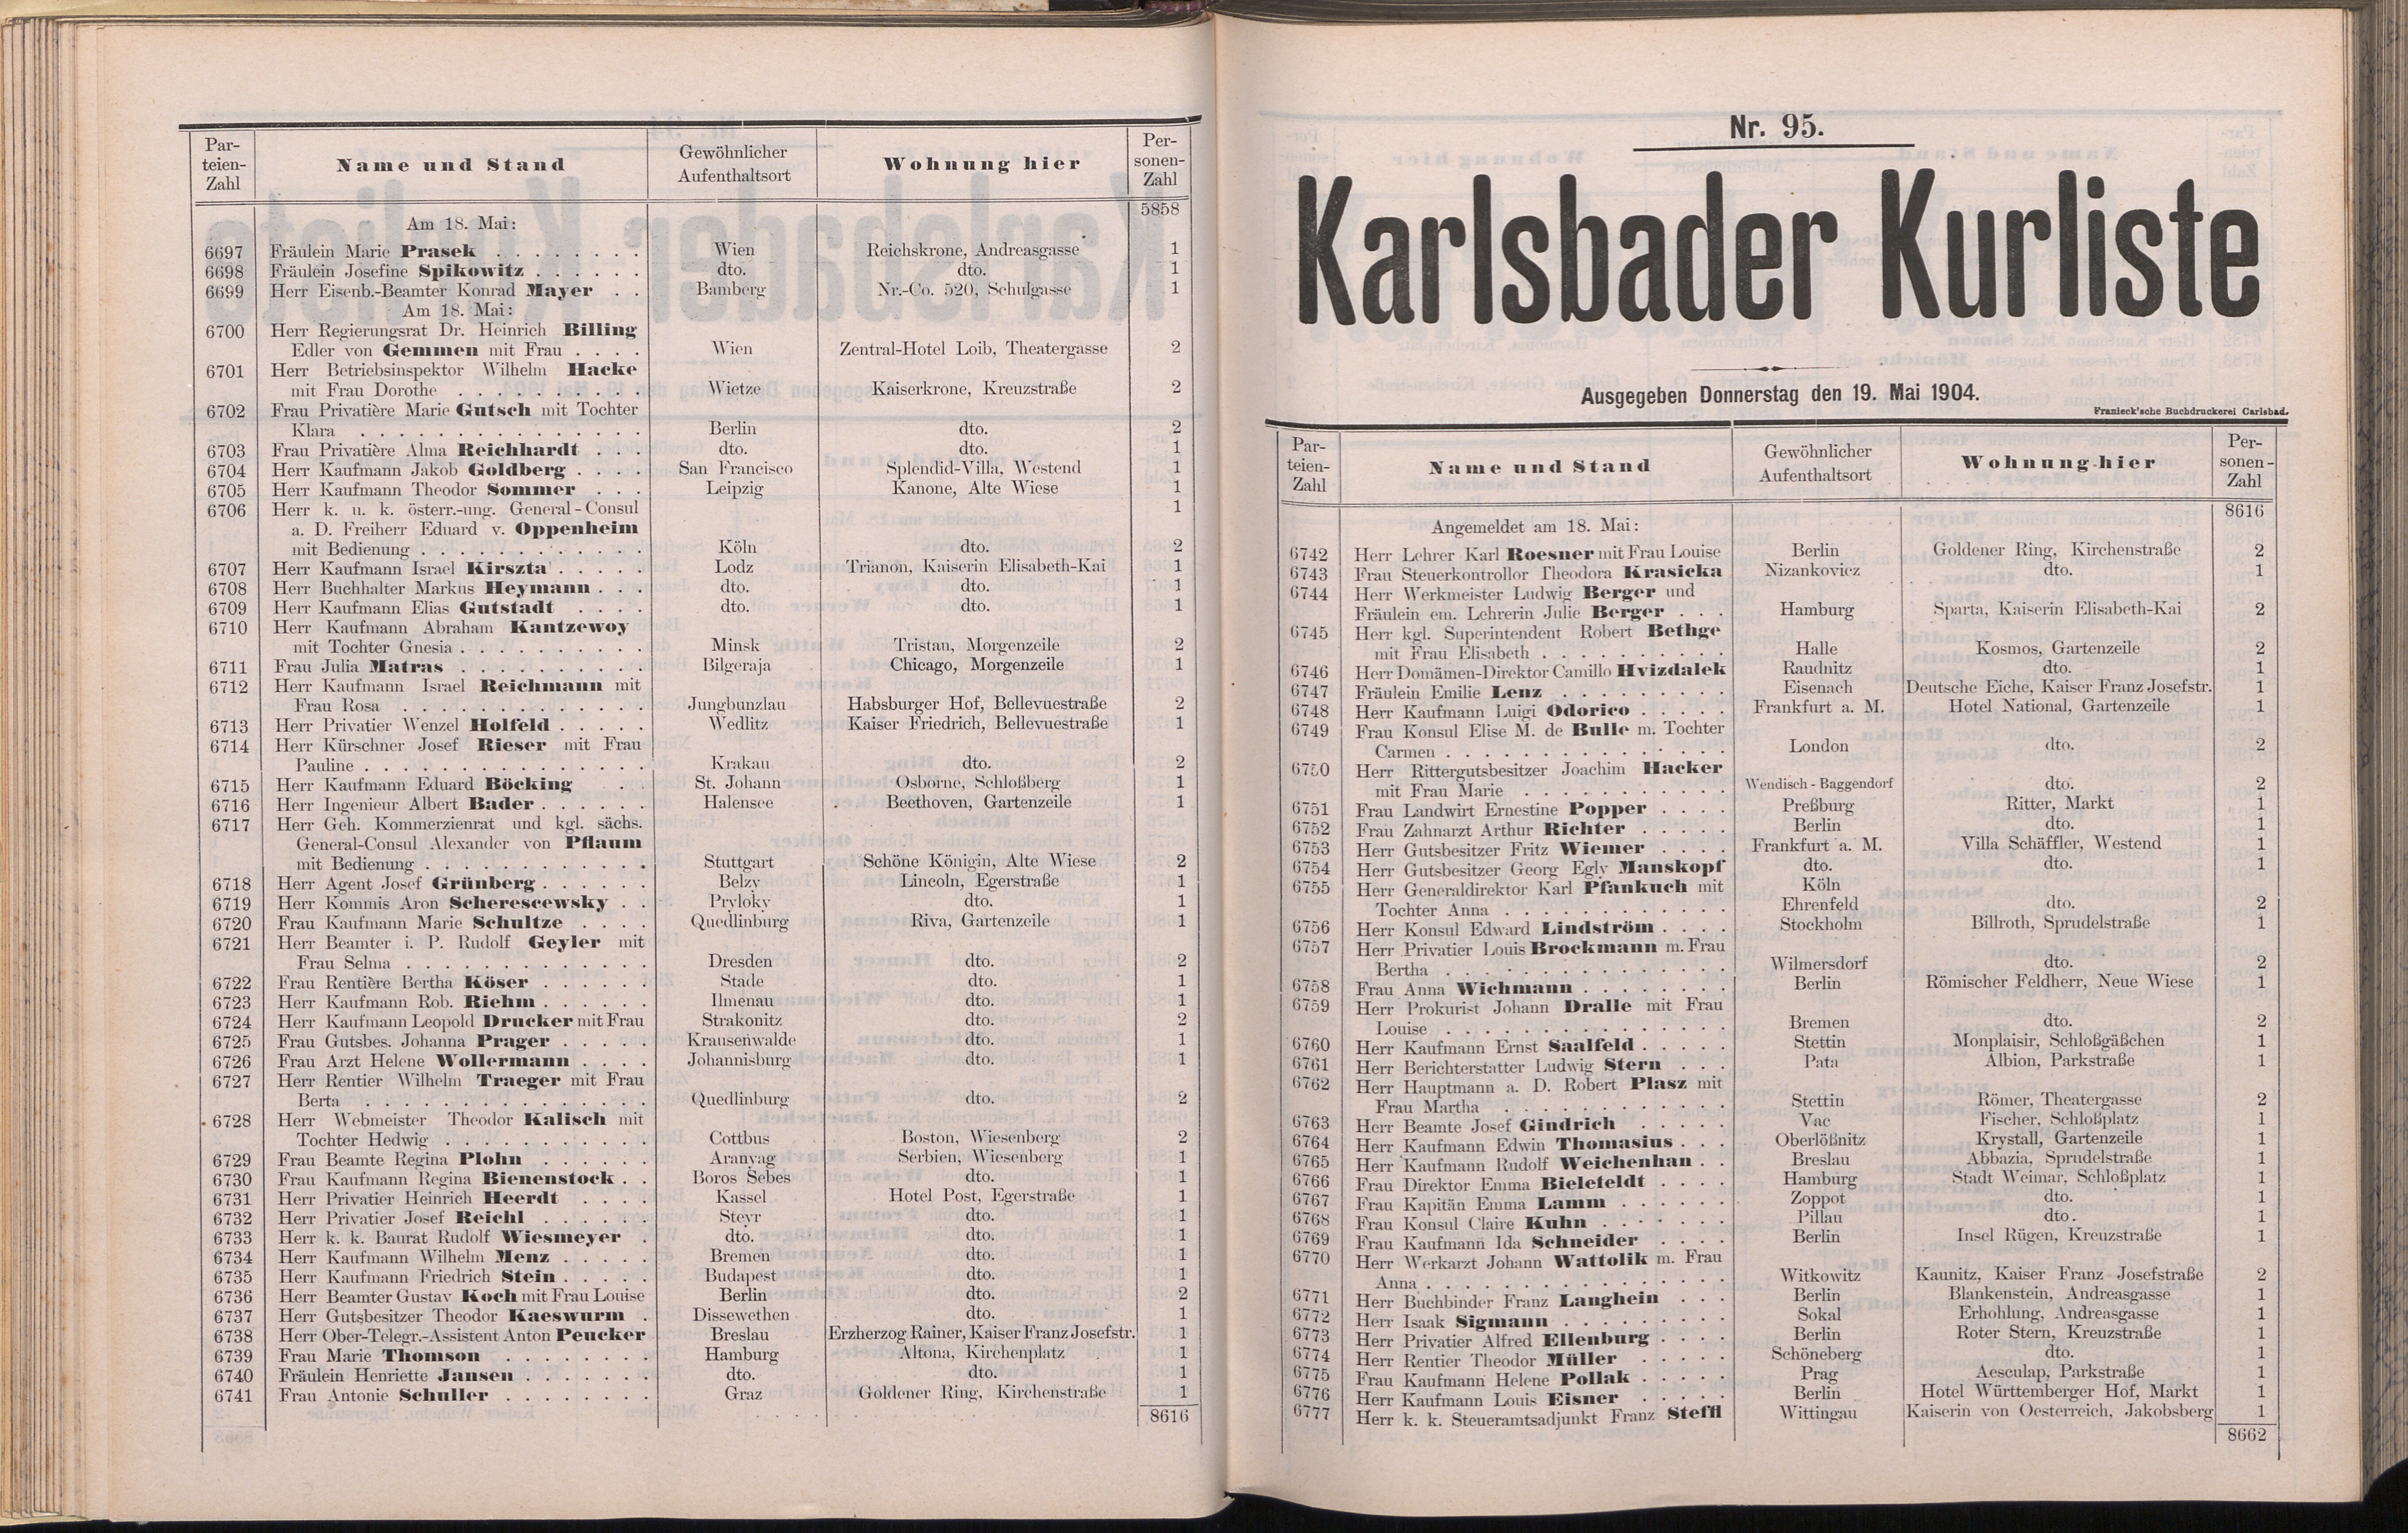 117. soap-kv_knihovna_karlsbader-kurliste-1904_1180